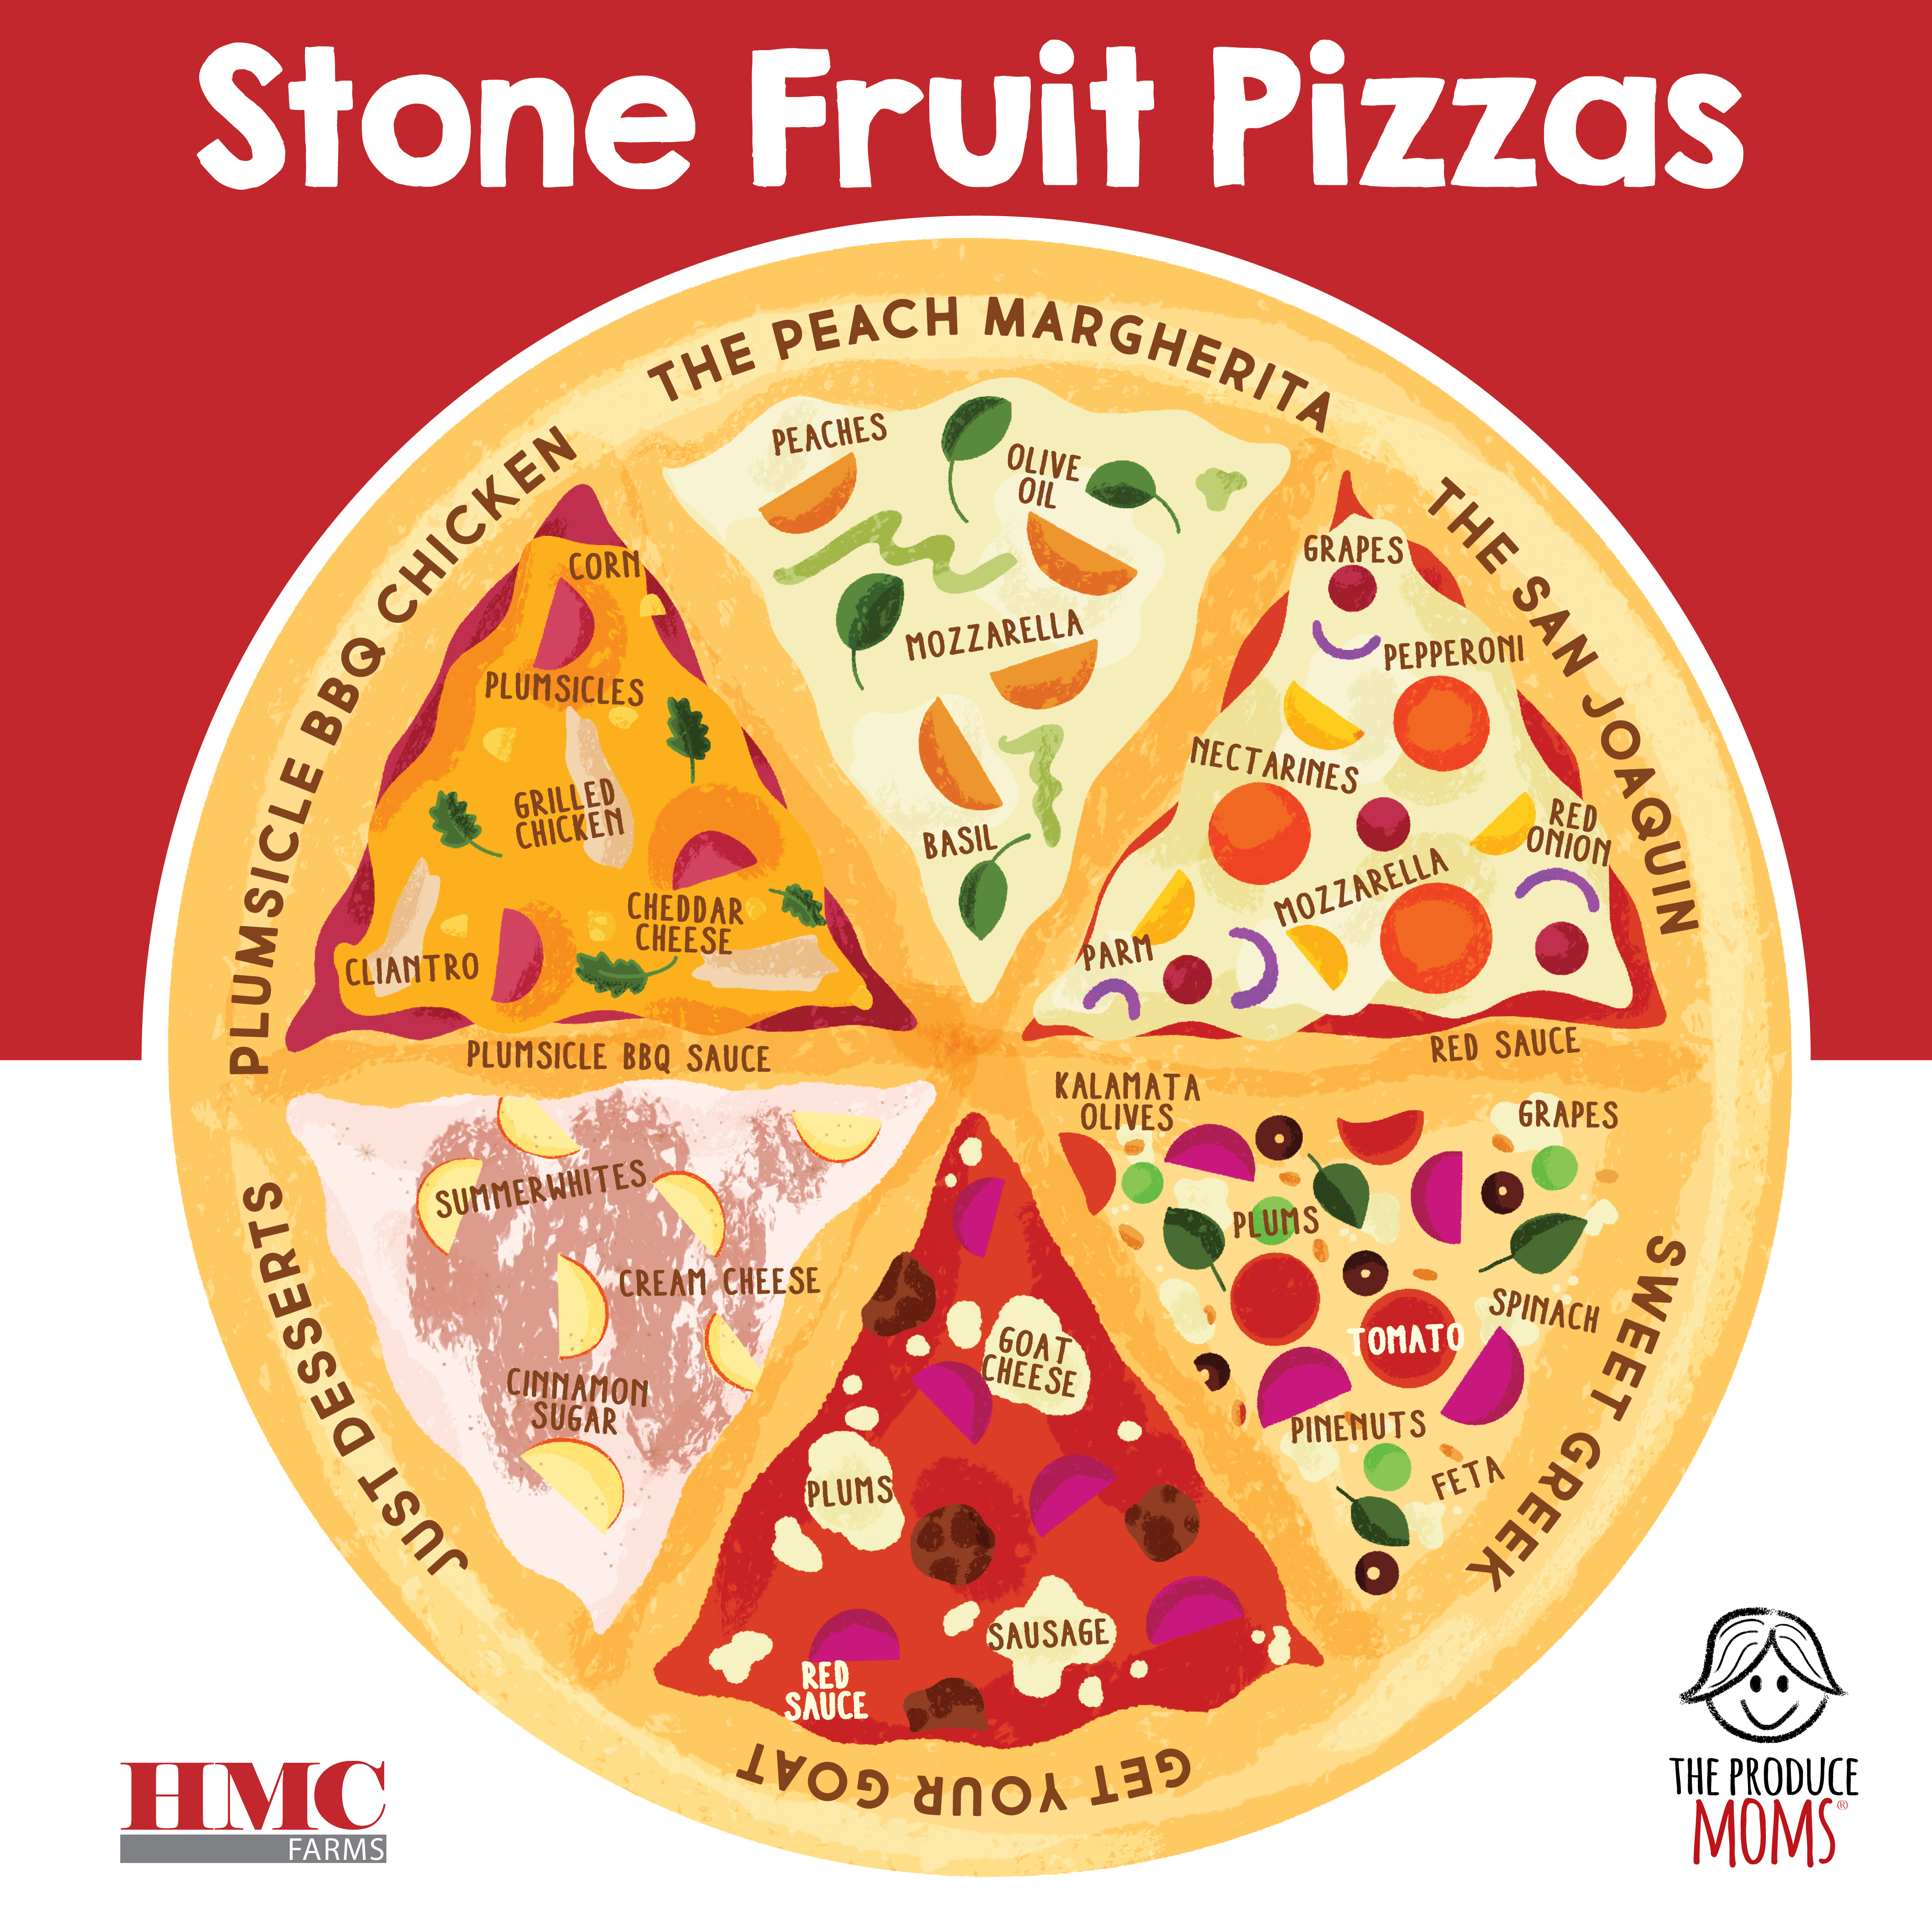 Six Stone Fruit Pizza ideas